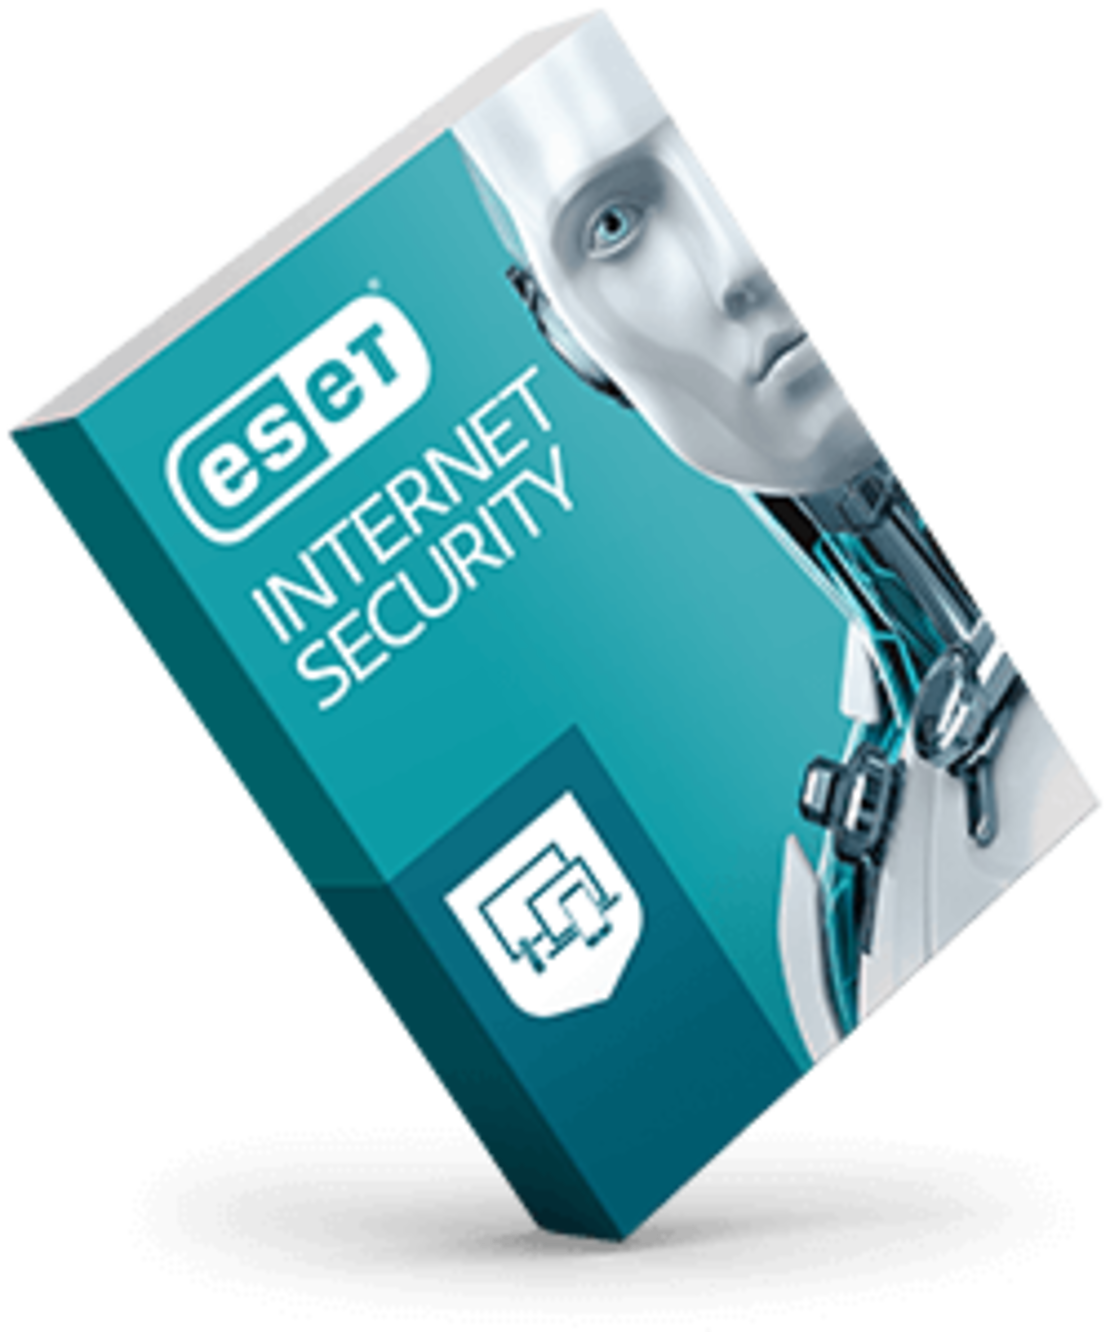 ESET Internet Security שלושה מחשבים שנה אחת